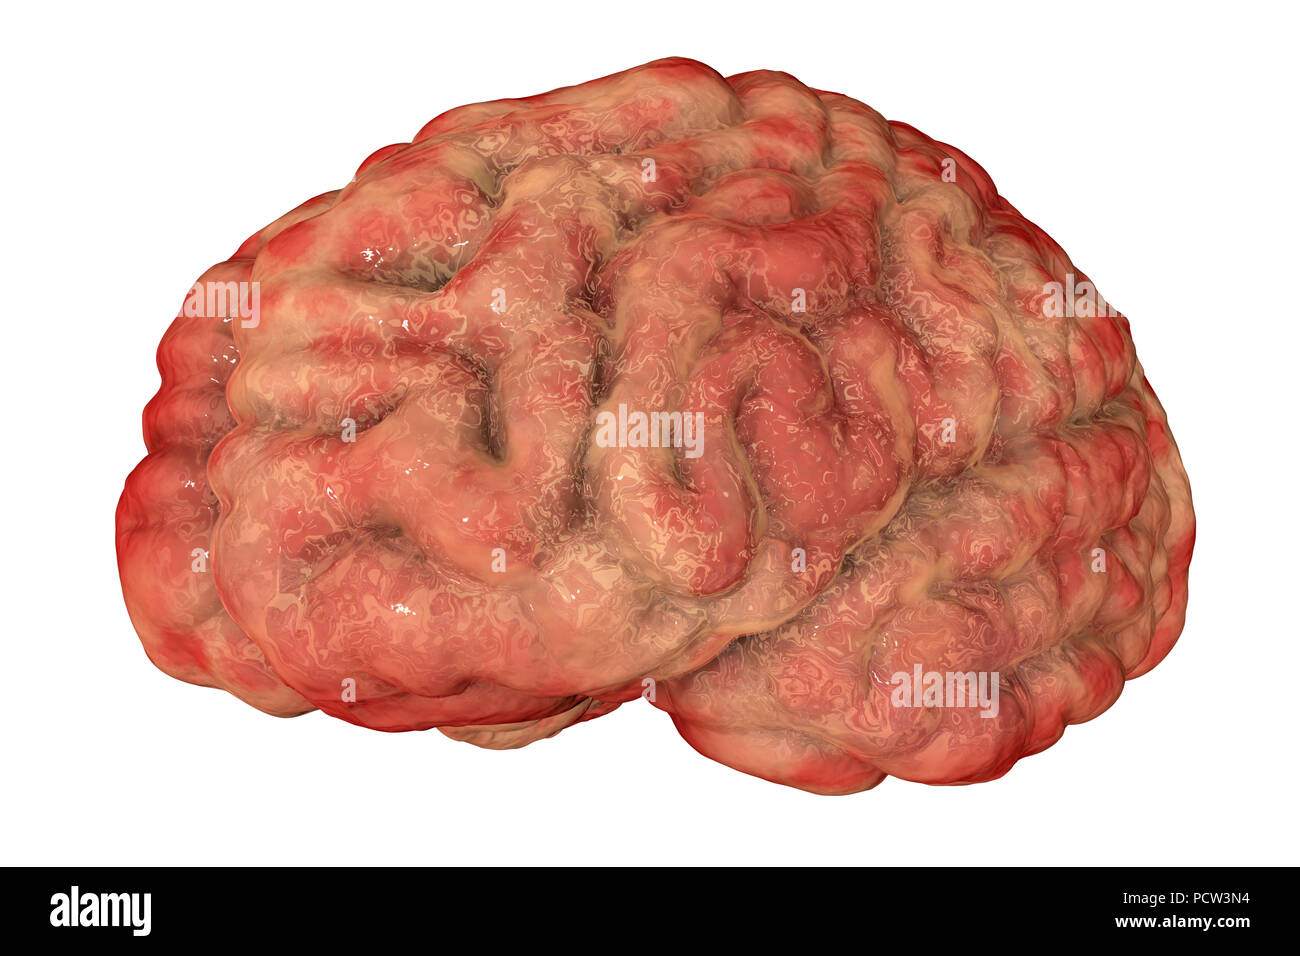 Brain with encephalitis. Computer illustration showing brain with signs of encephalitis, such as brain edema, haemorrhages and necrosis. Stock Photo